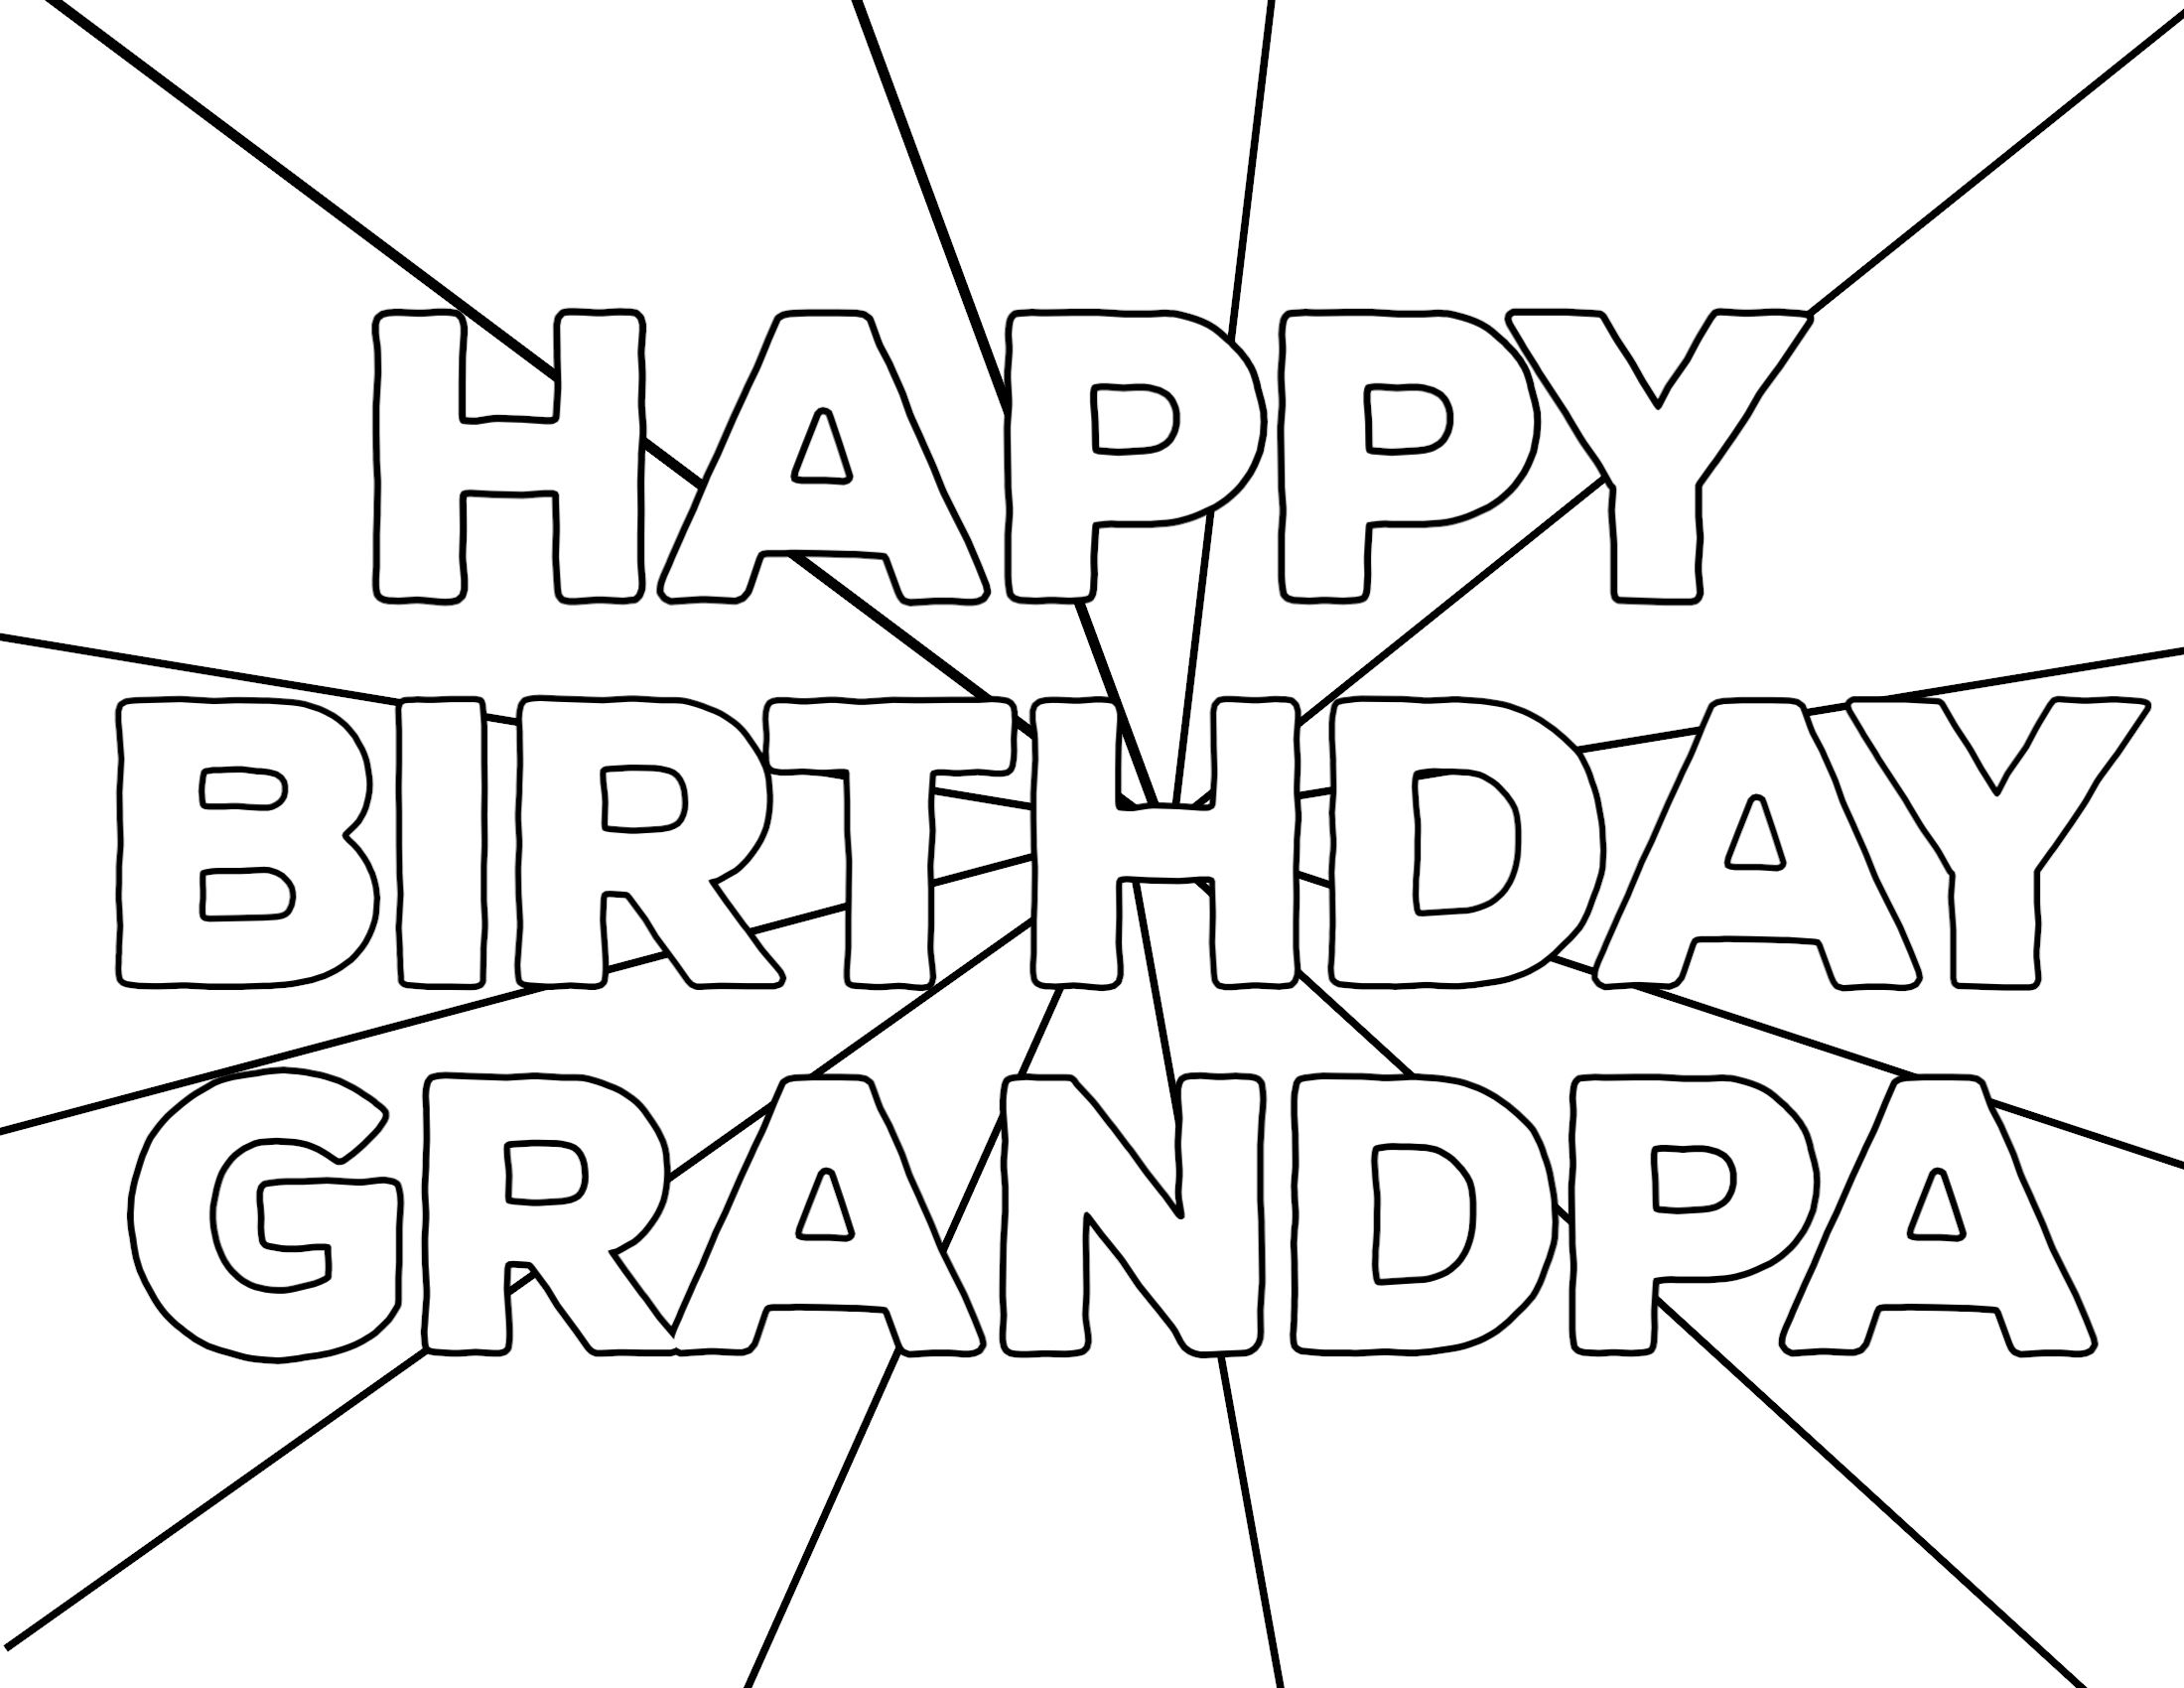 Happy Birthday Grandpa Coloring Page Printable.